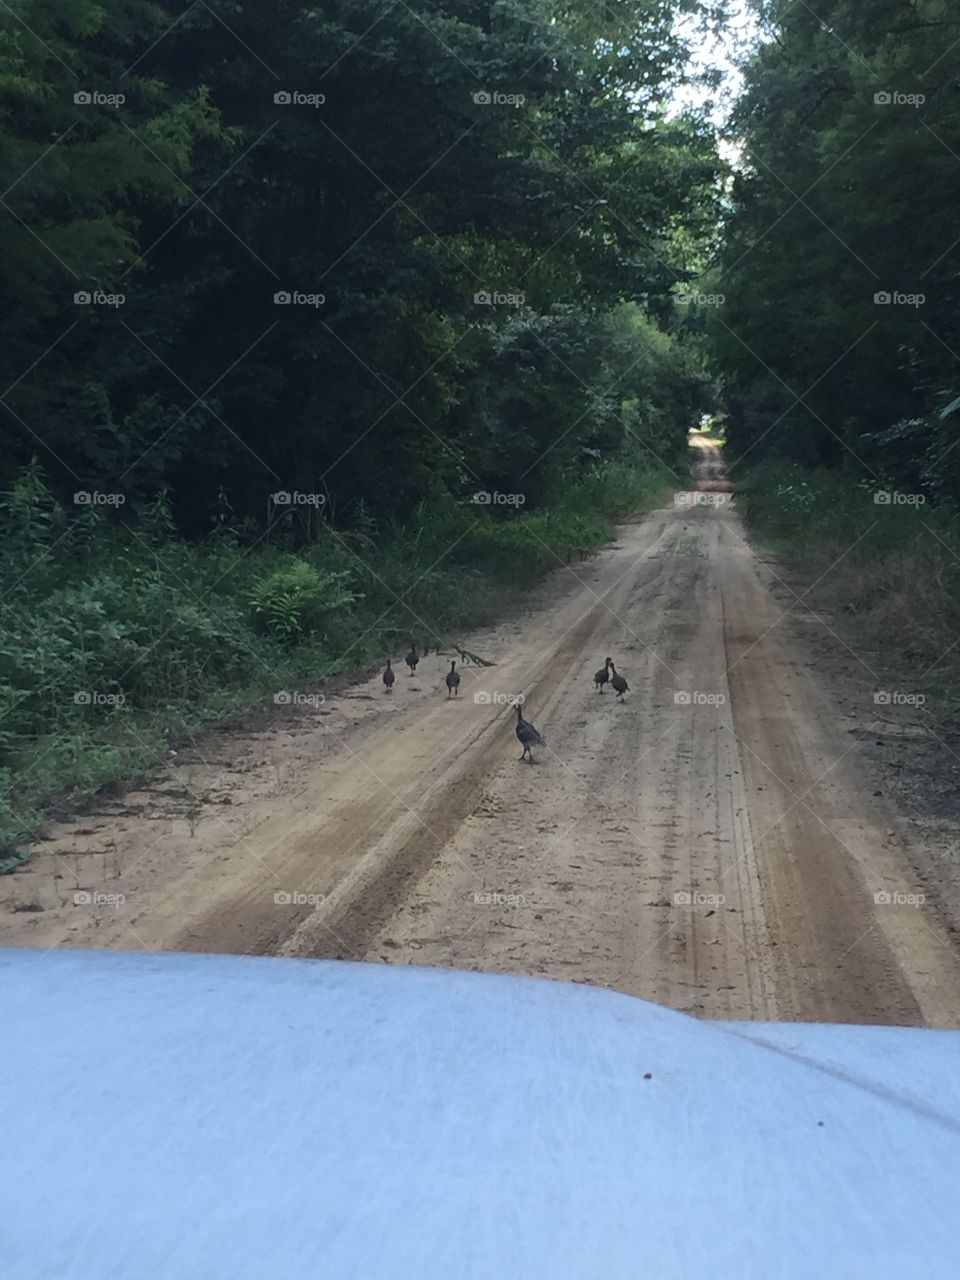 Baby turkeys on the path